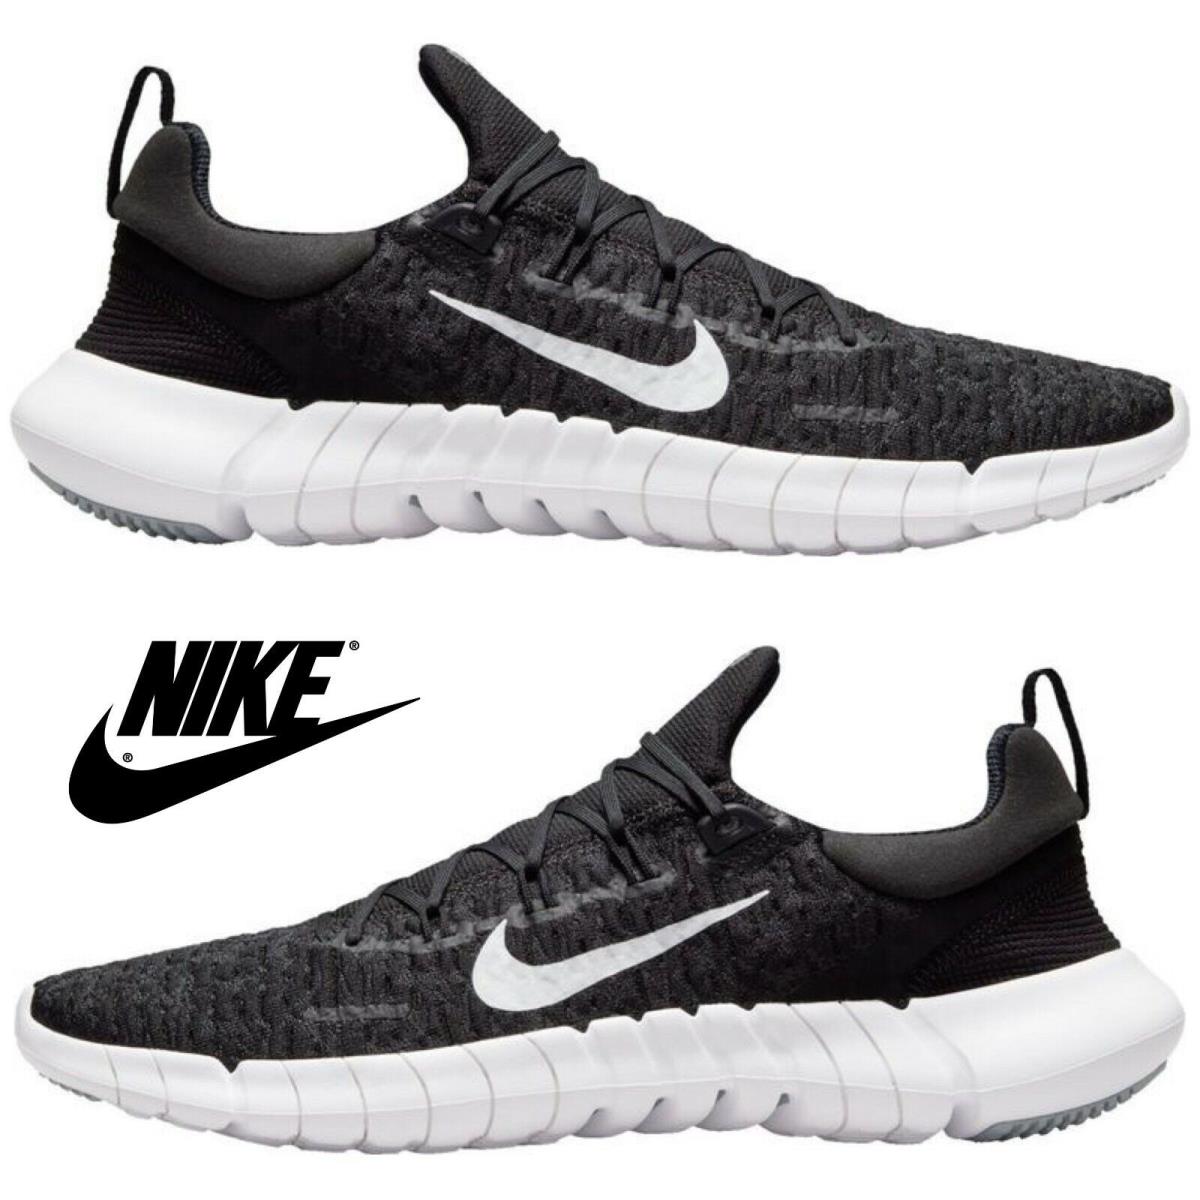 Nike Men`s Free Run 5.0 Running Shoes Training Athletic Sport Casual Sneakers - Black, Manufacturer: BLACK/WHITE